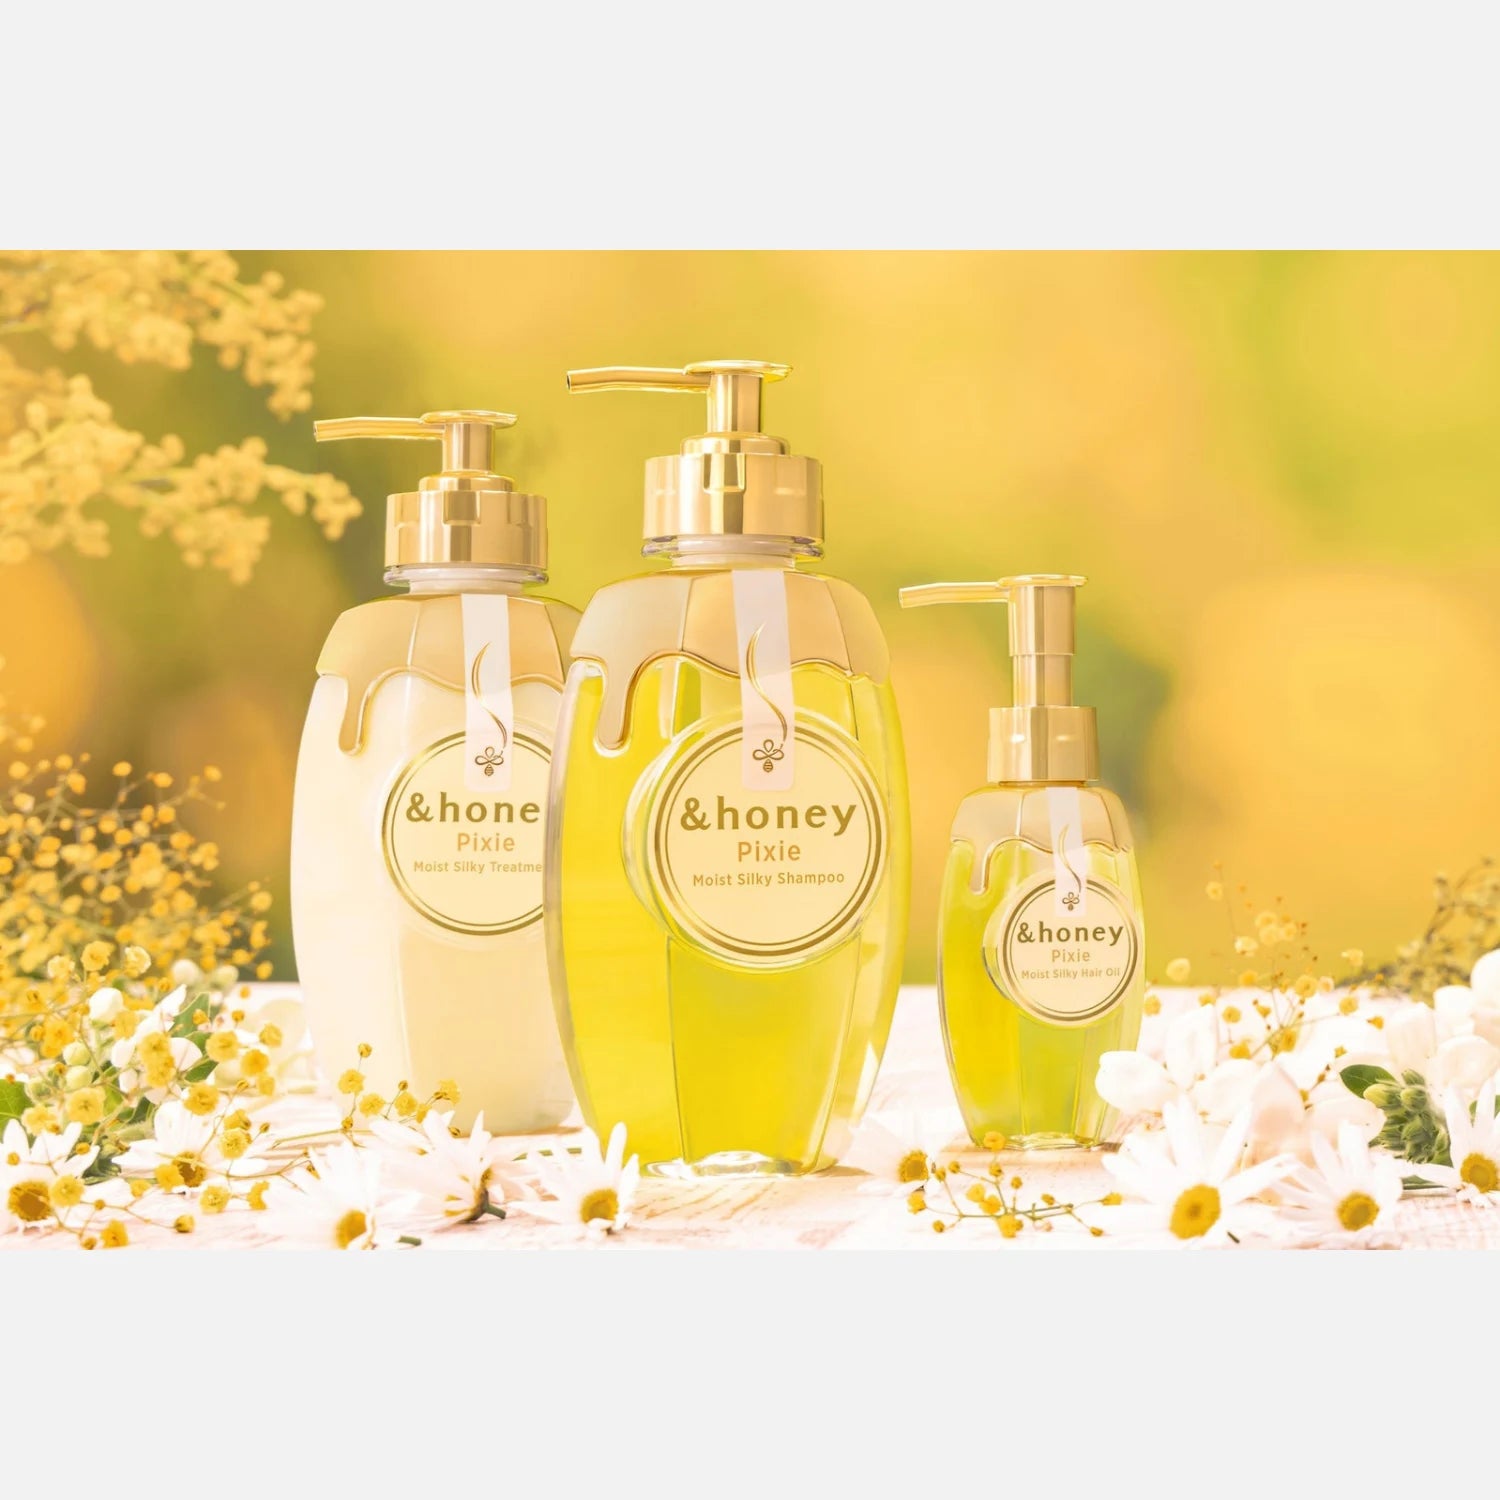 & Honey Pixie Moist Silky Shampoo & Treatment Set 440ml Each - Buy Me Japan